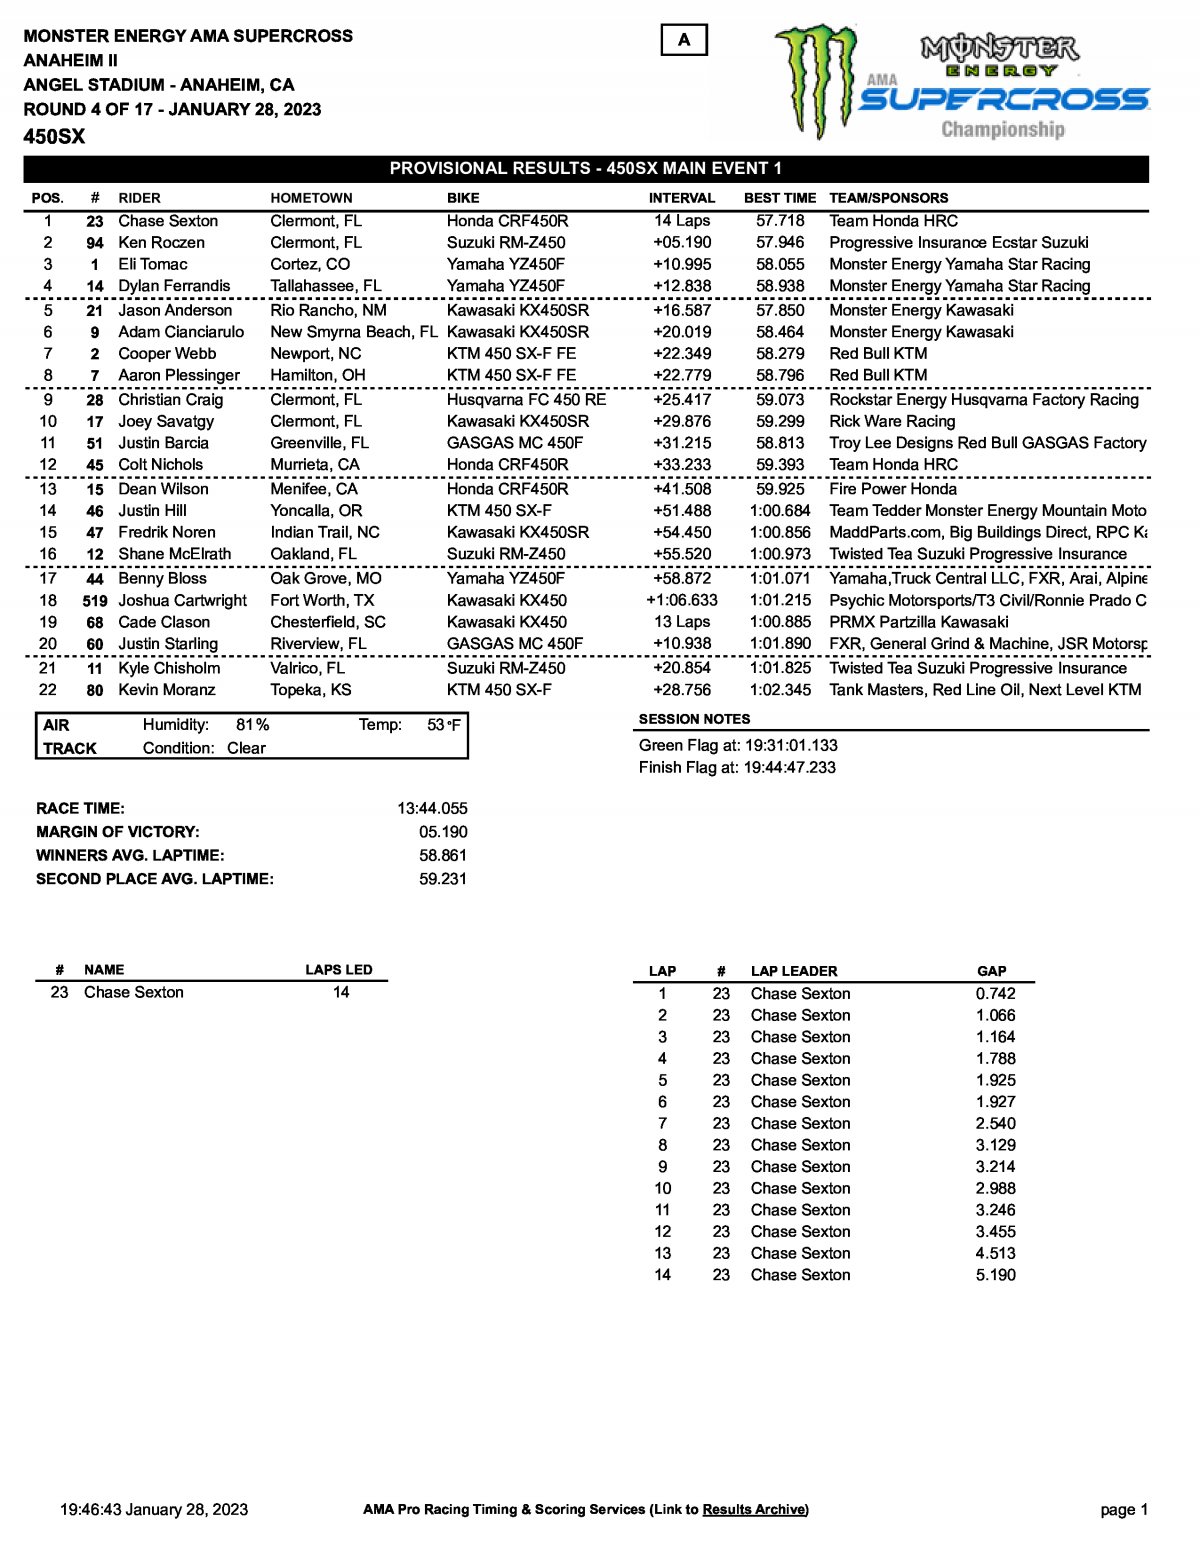 AMA Supercross - Результаты 1 заезда Triple Crown 450SX Anaheim-2 (2023)